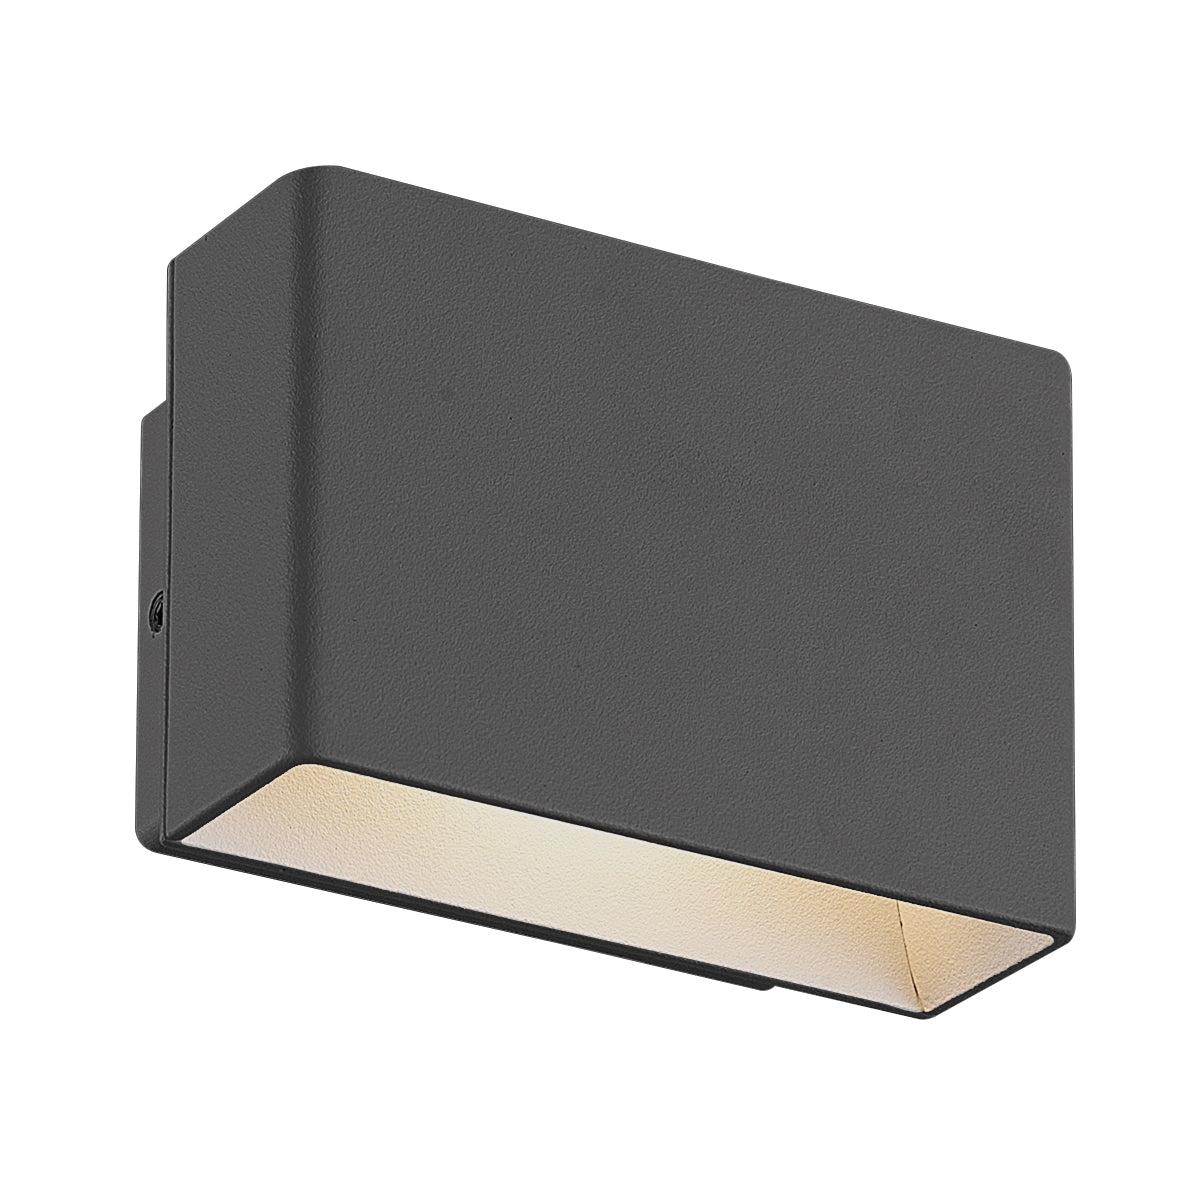 VELLO Outdoor sconce Aluminum - 28282-020 INTEGRATED LED | EUROFASE